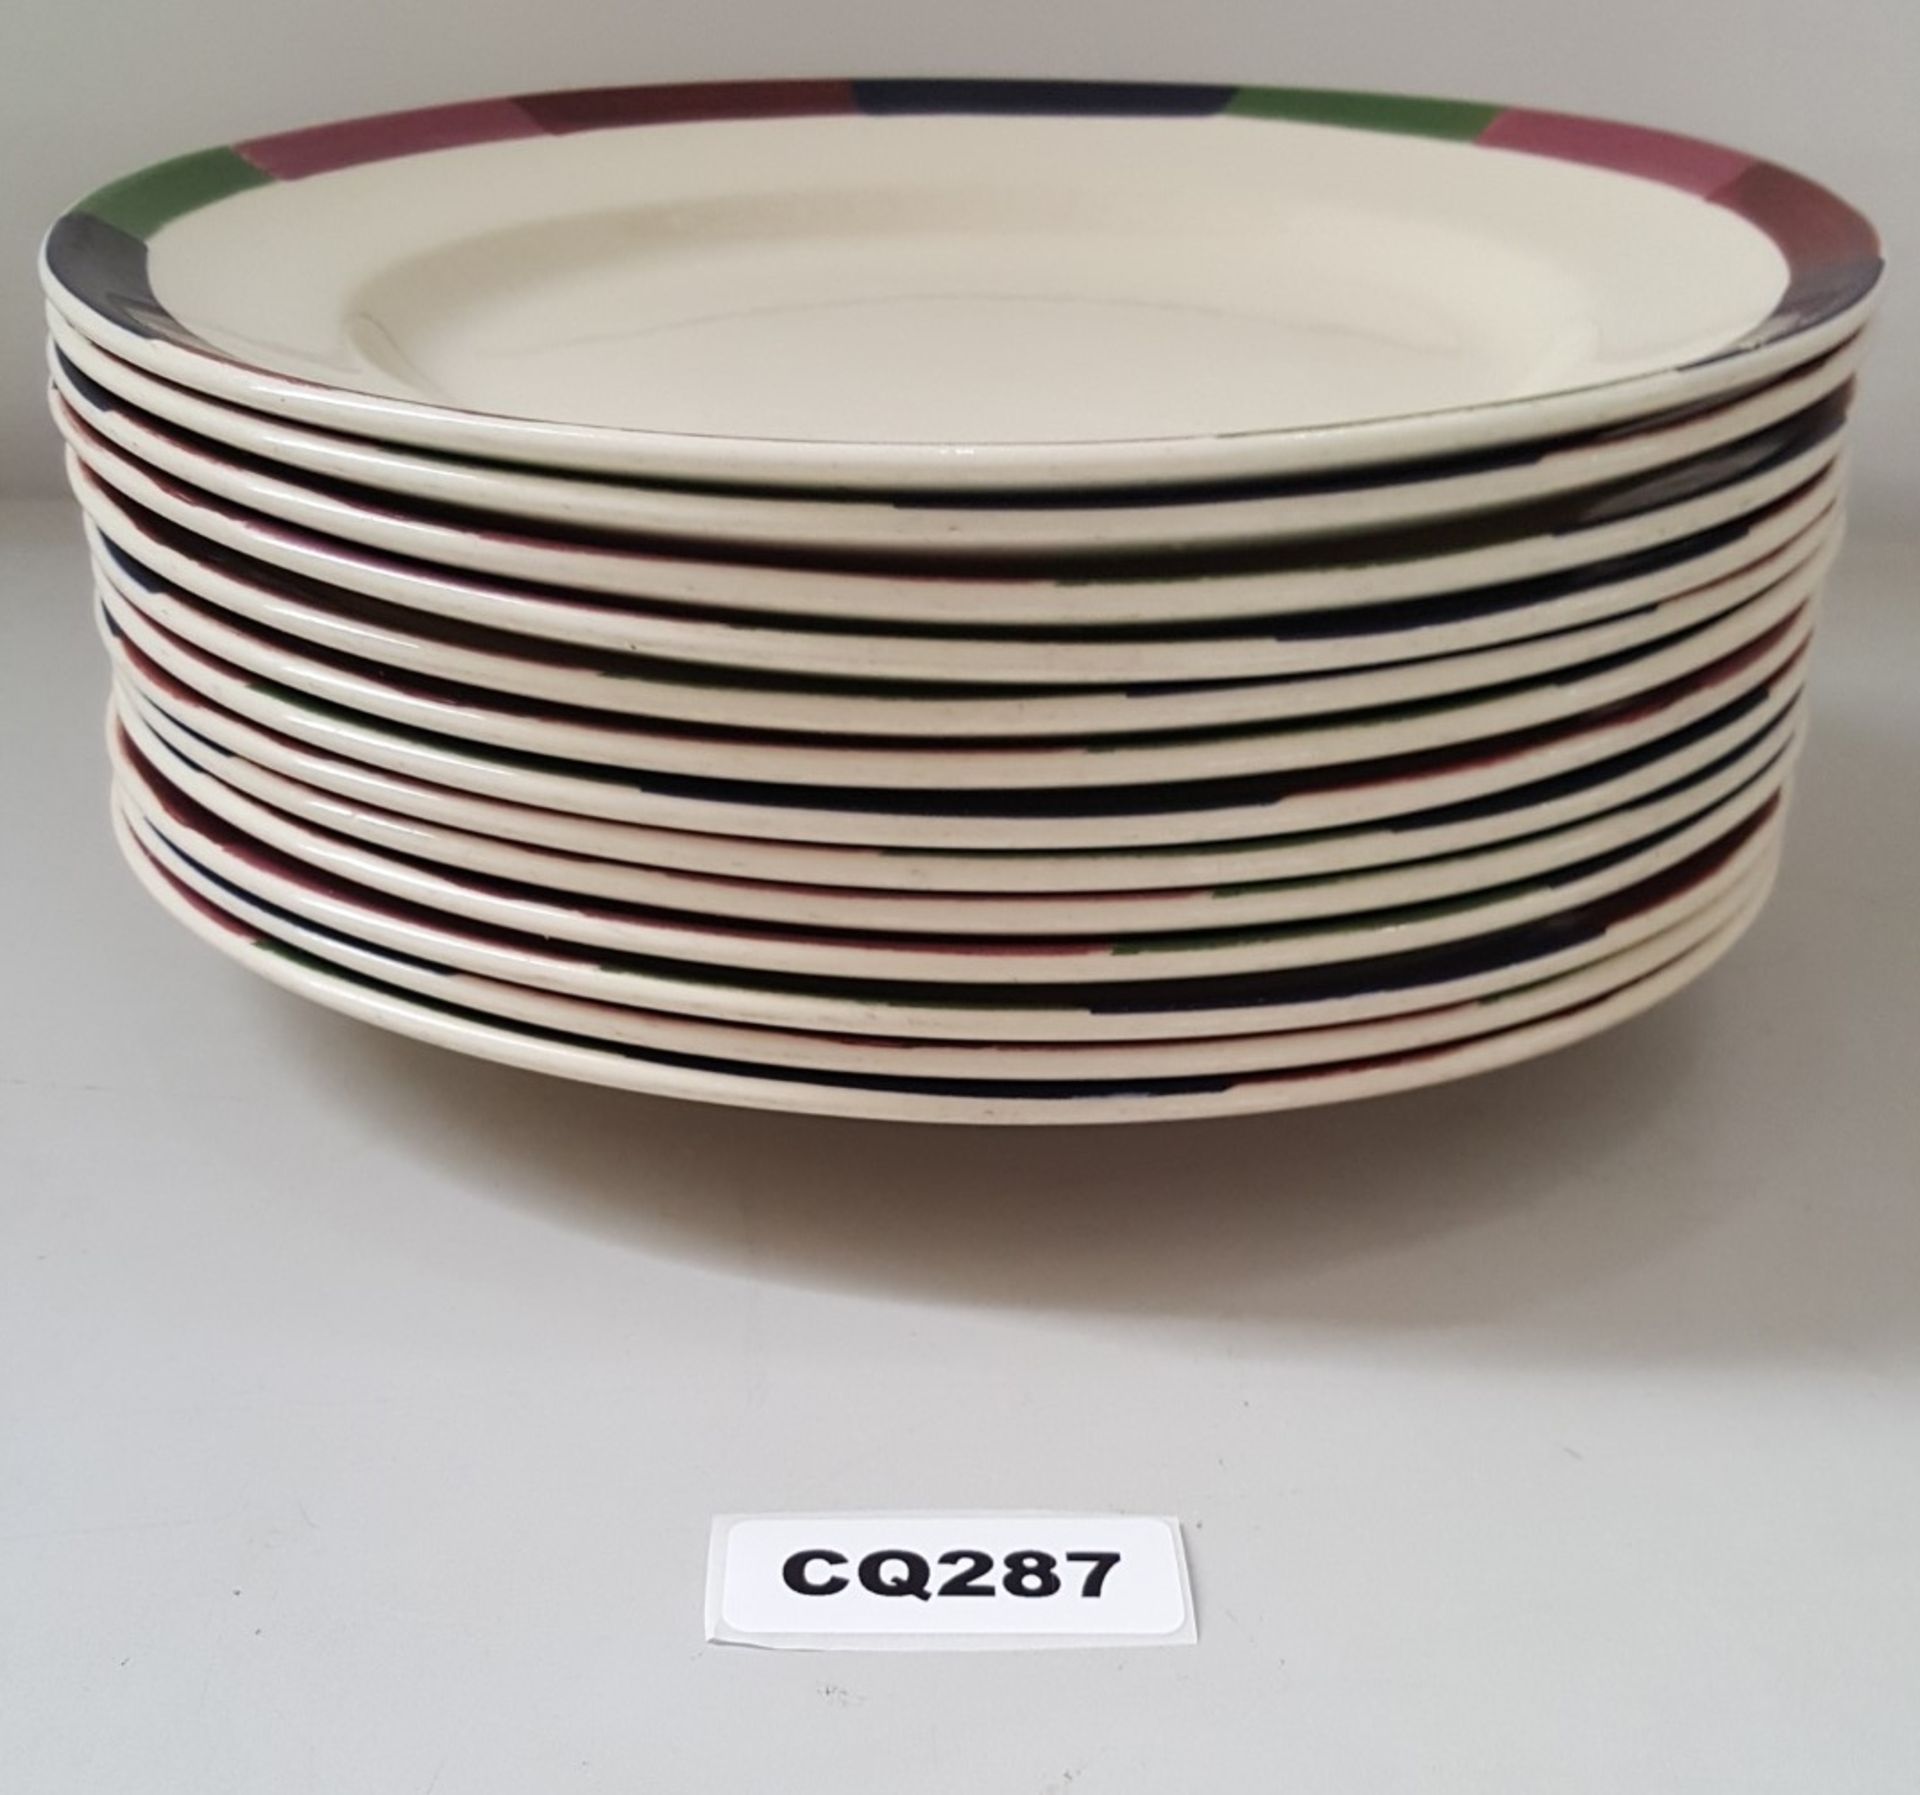 13 x Steelite Harmony Plates Cream With Pattered Egde 27CM - Ref CQ287 - Image 4 of 5